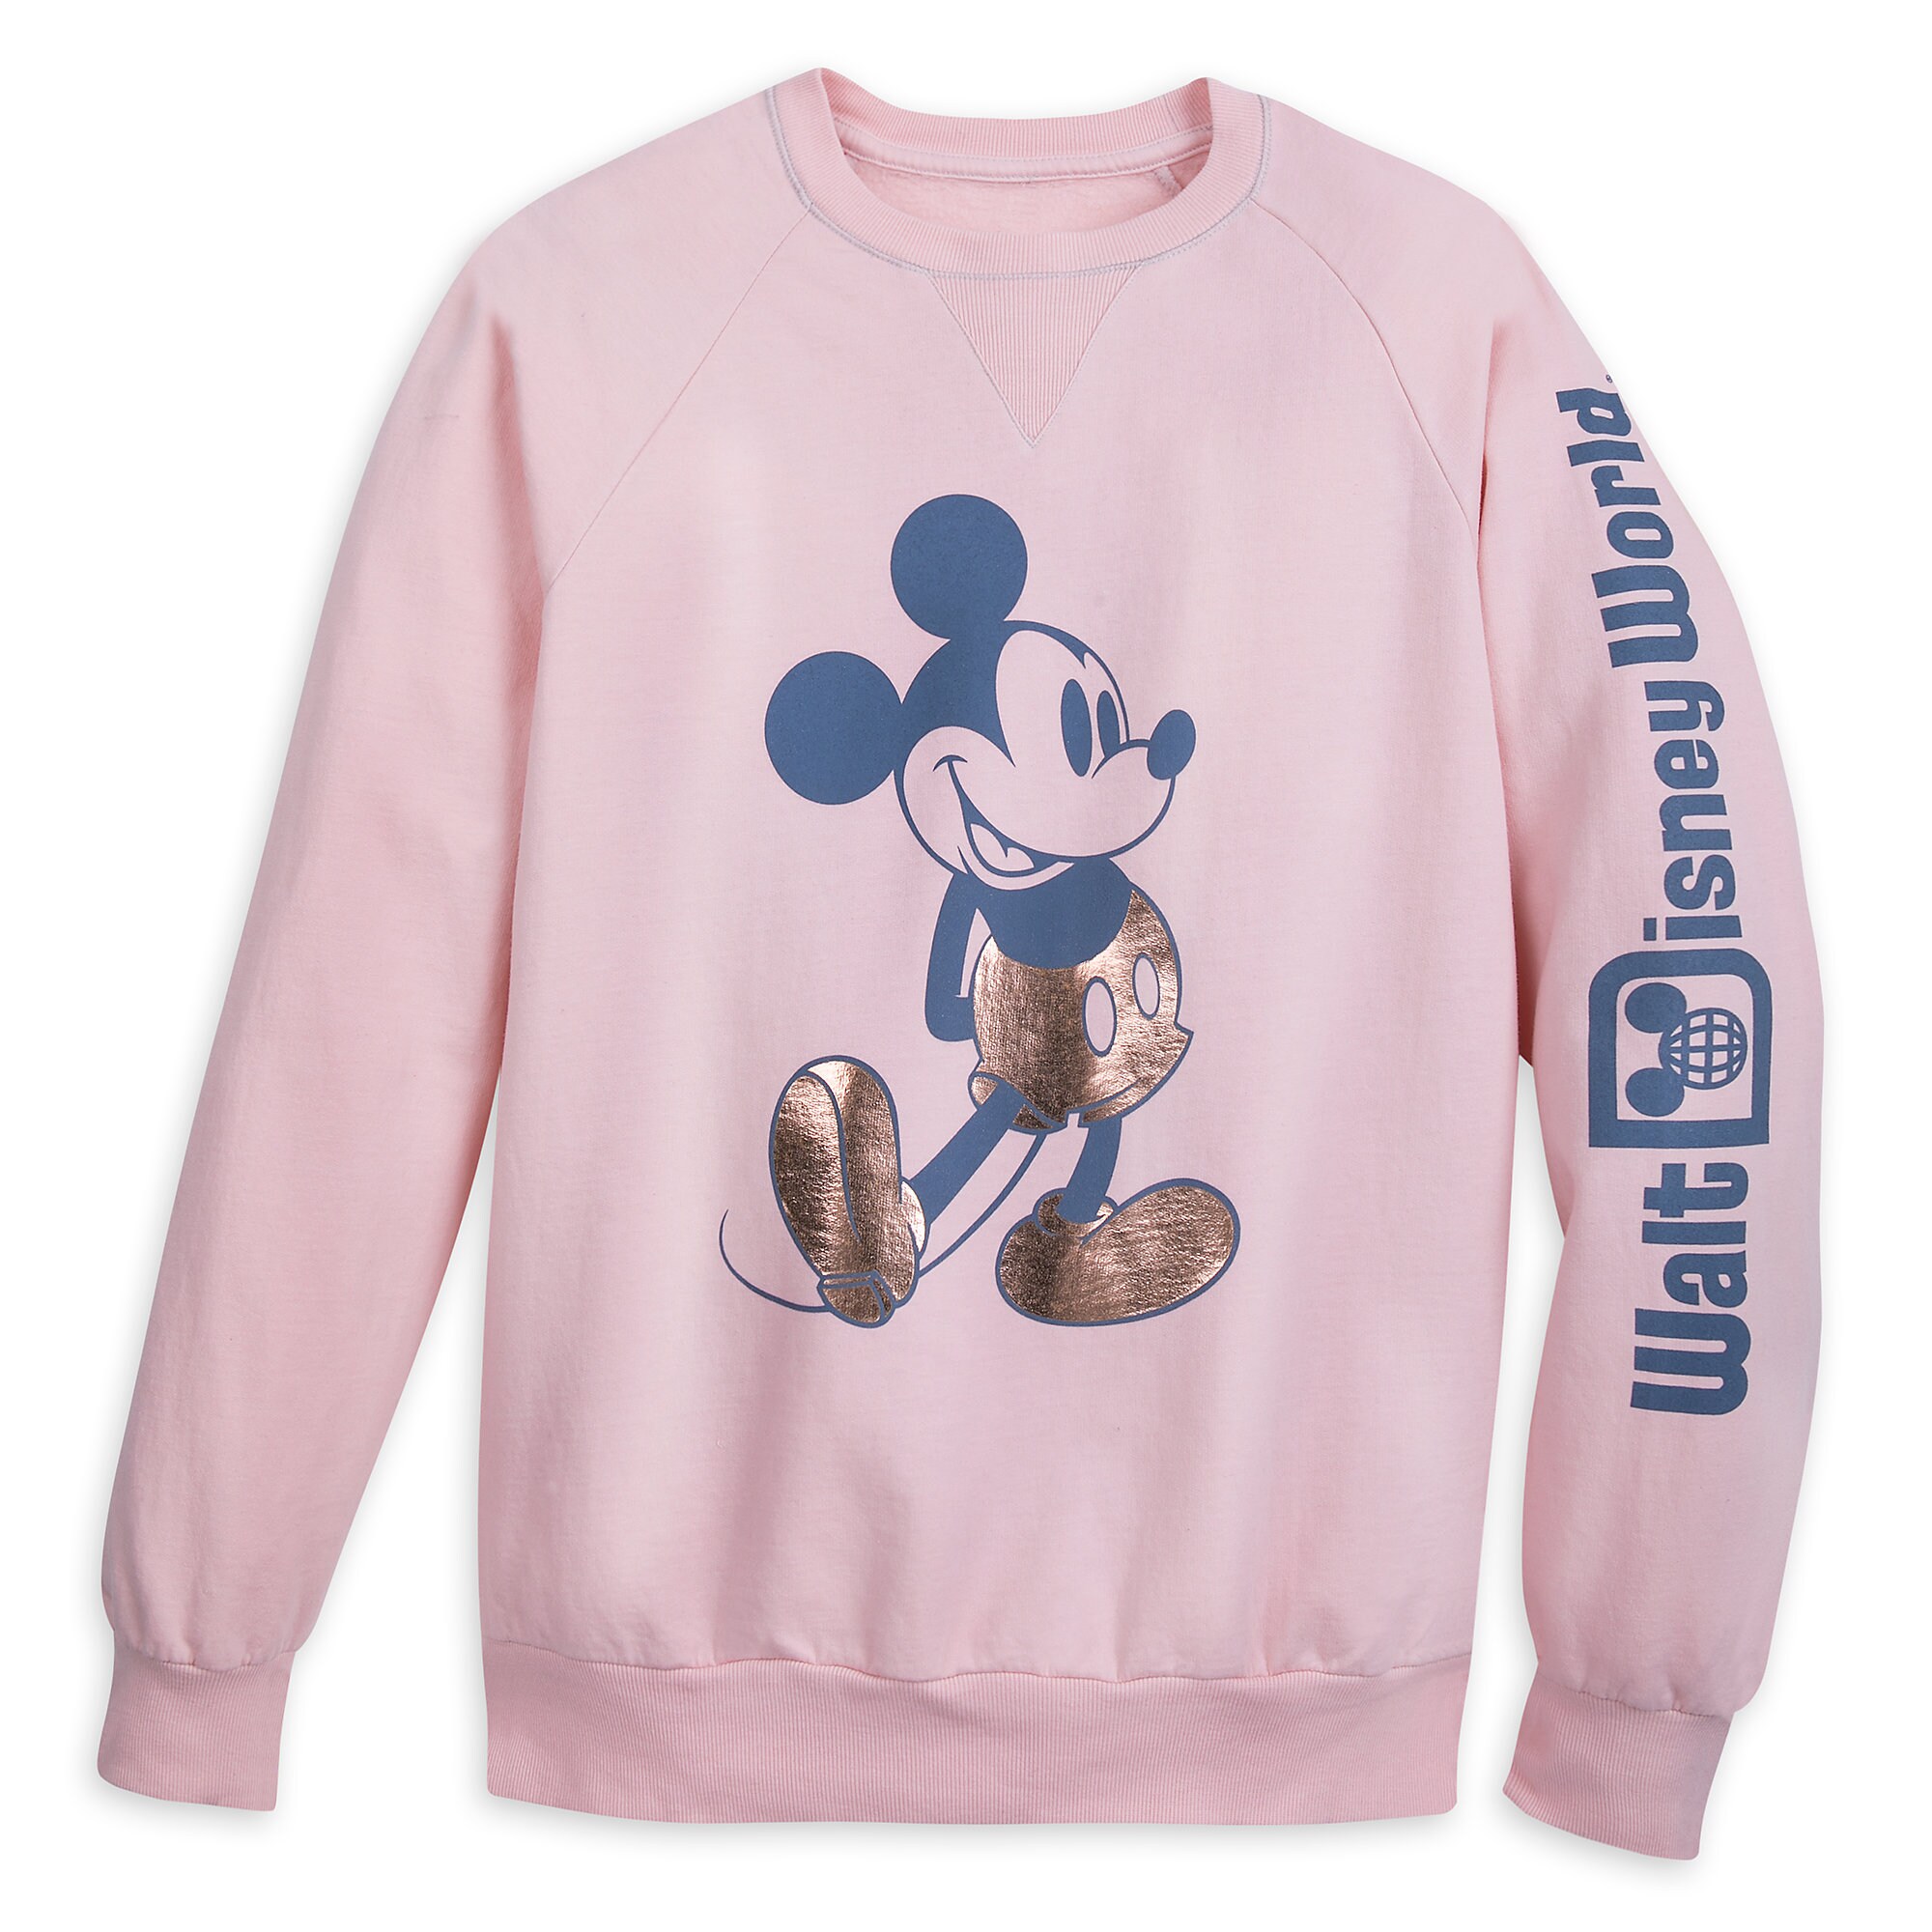 Mickey Mouse Sweatshirt for Adults - Walt Disney World - Briar Rose Gold